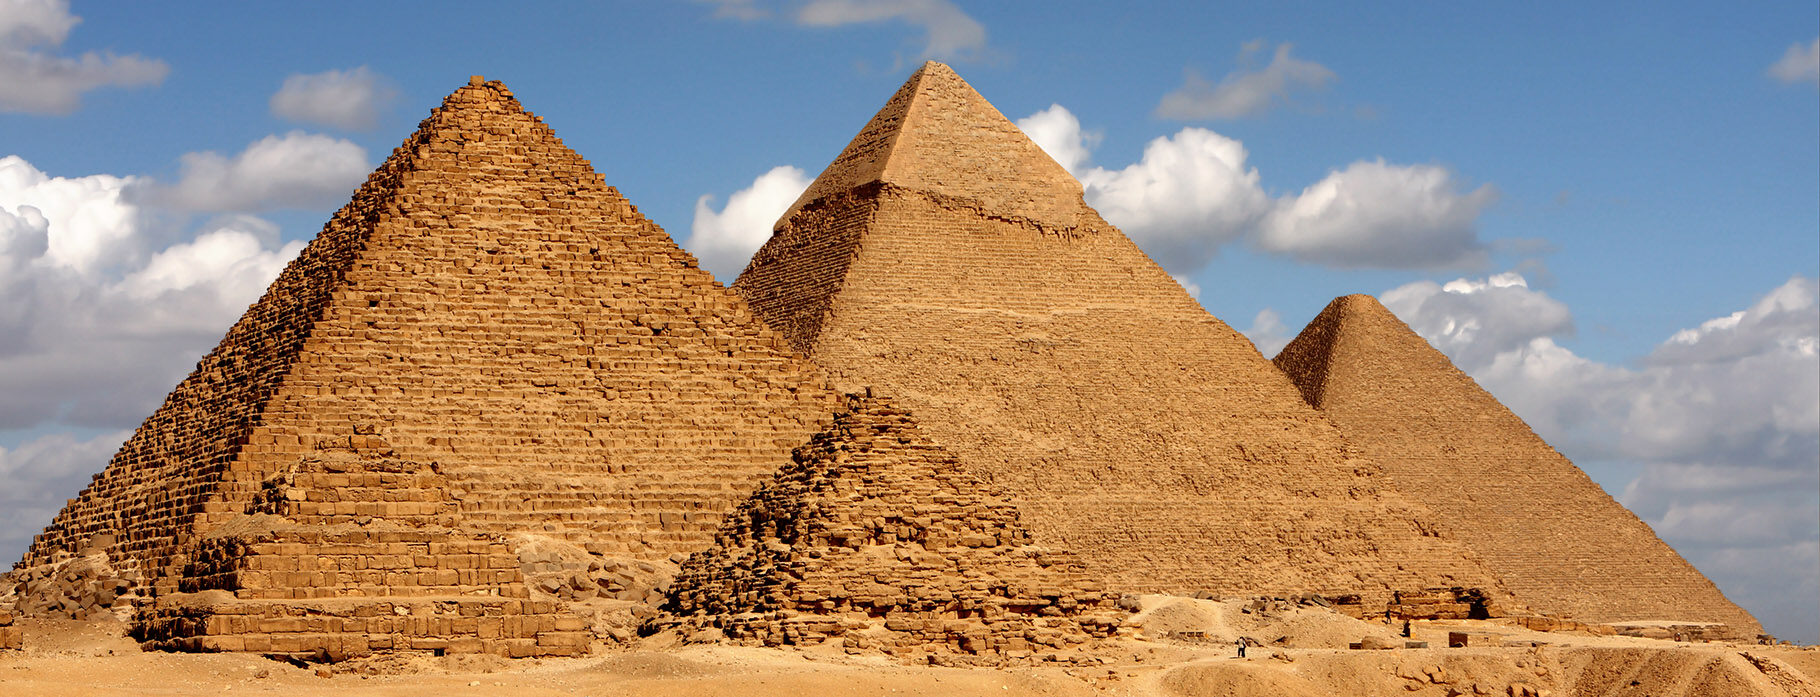 11 DAYS KINGDOMS OF EGYPT